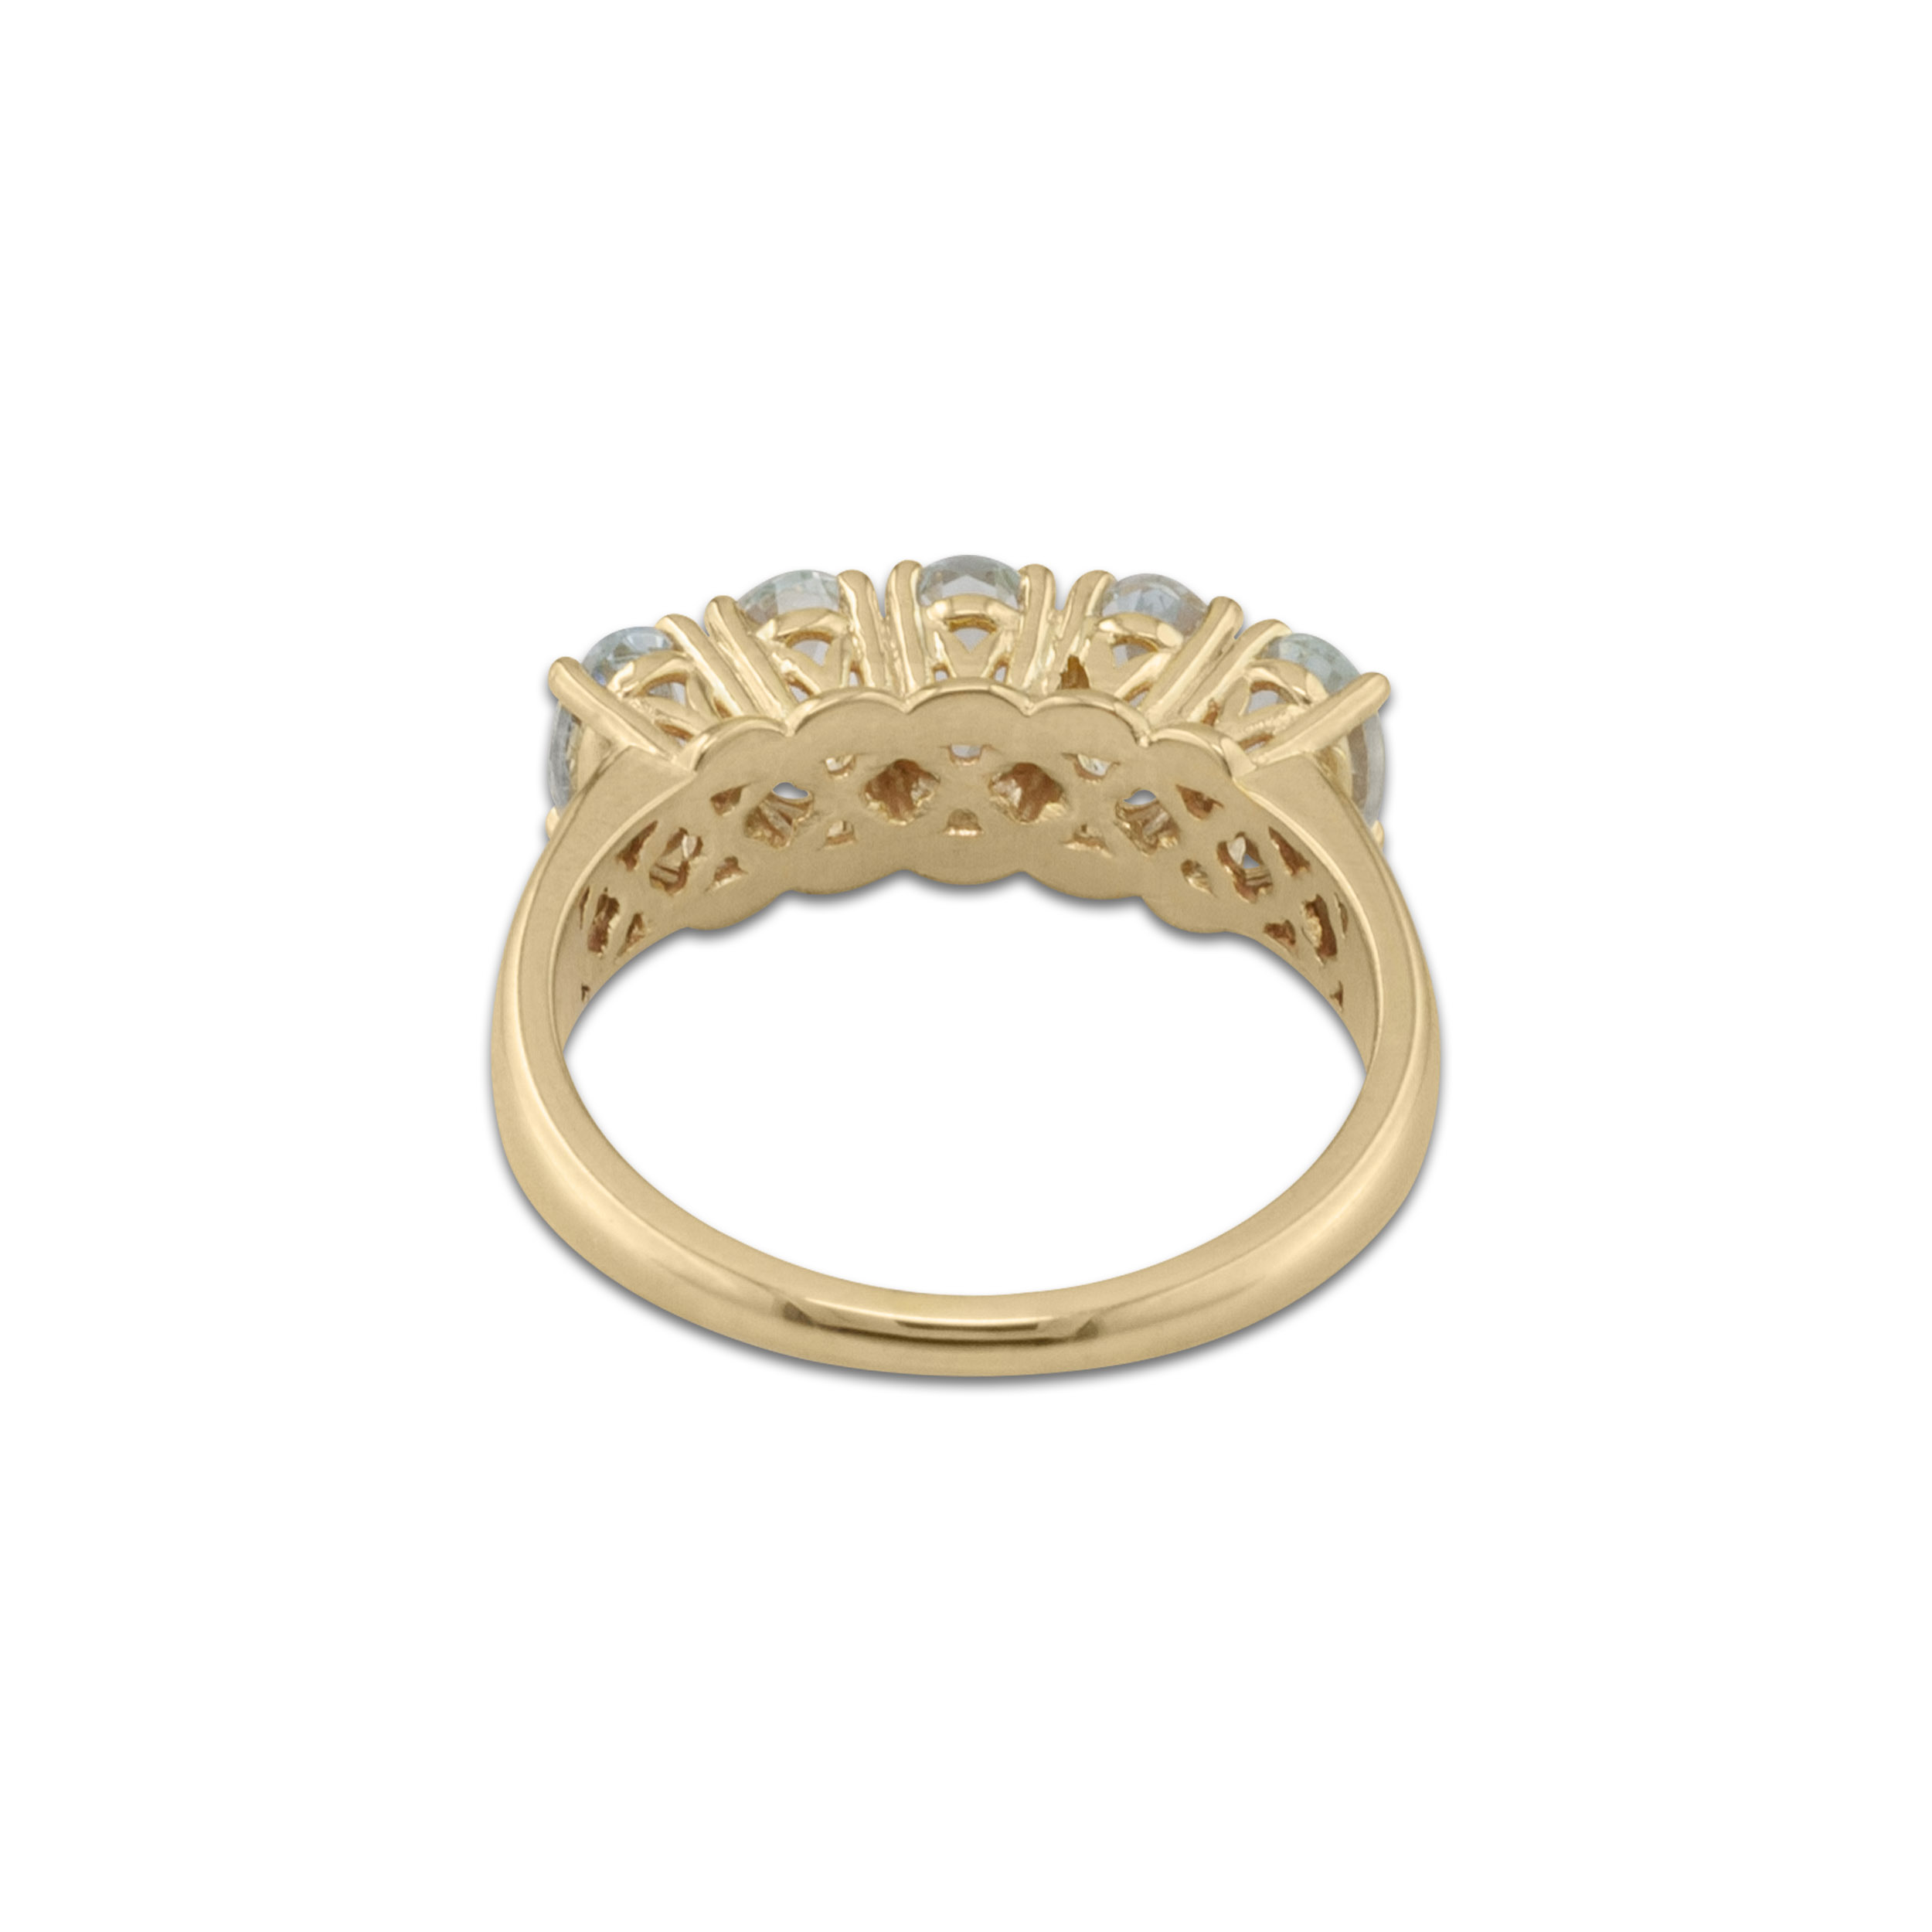 k18 gold ring with aquamarines